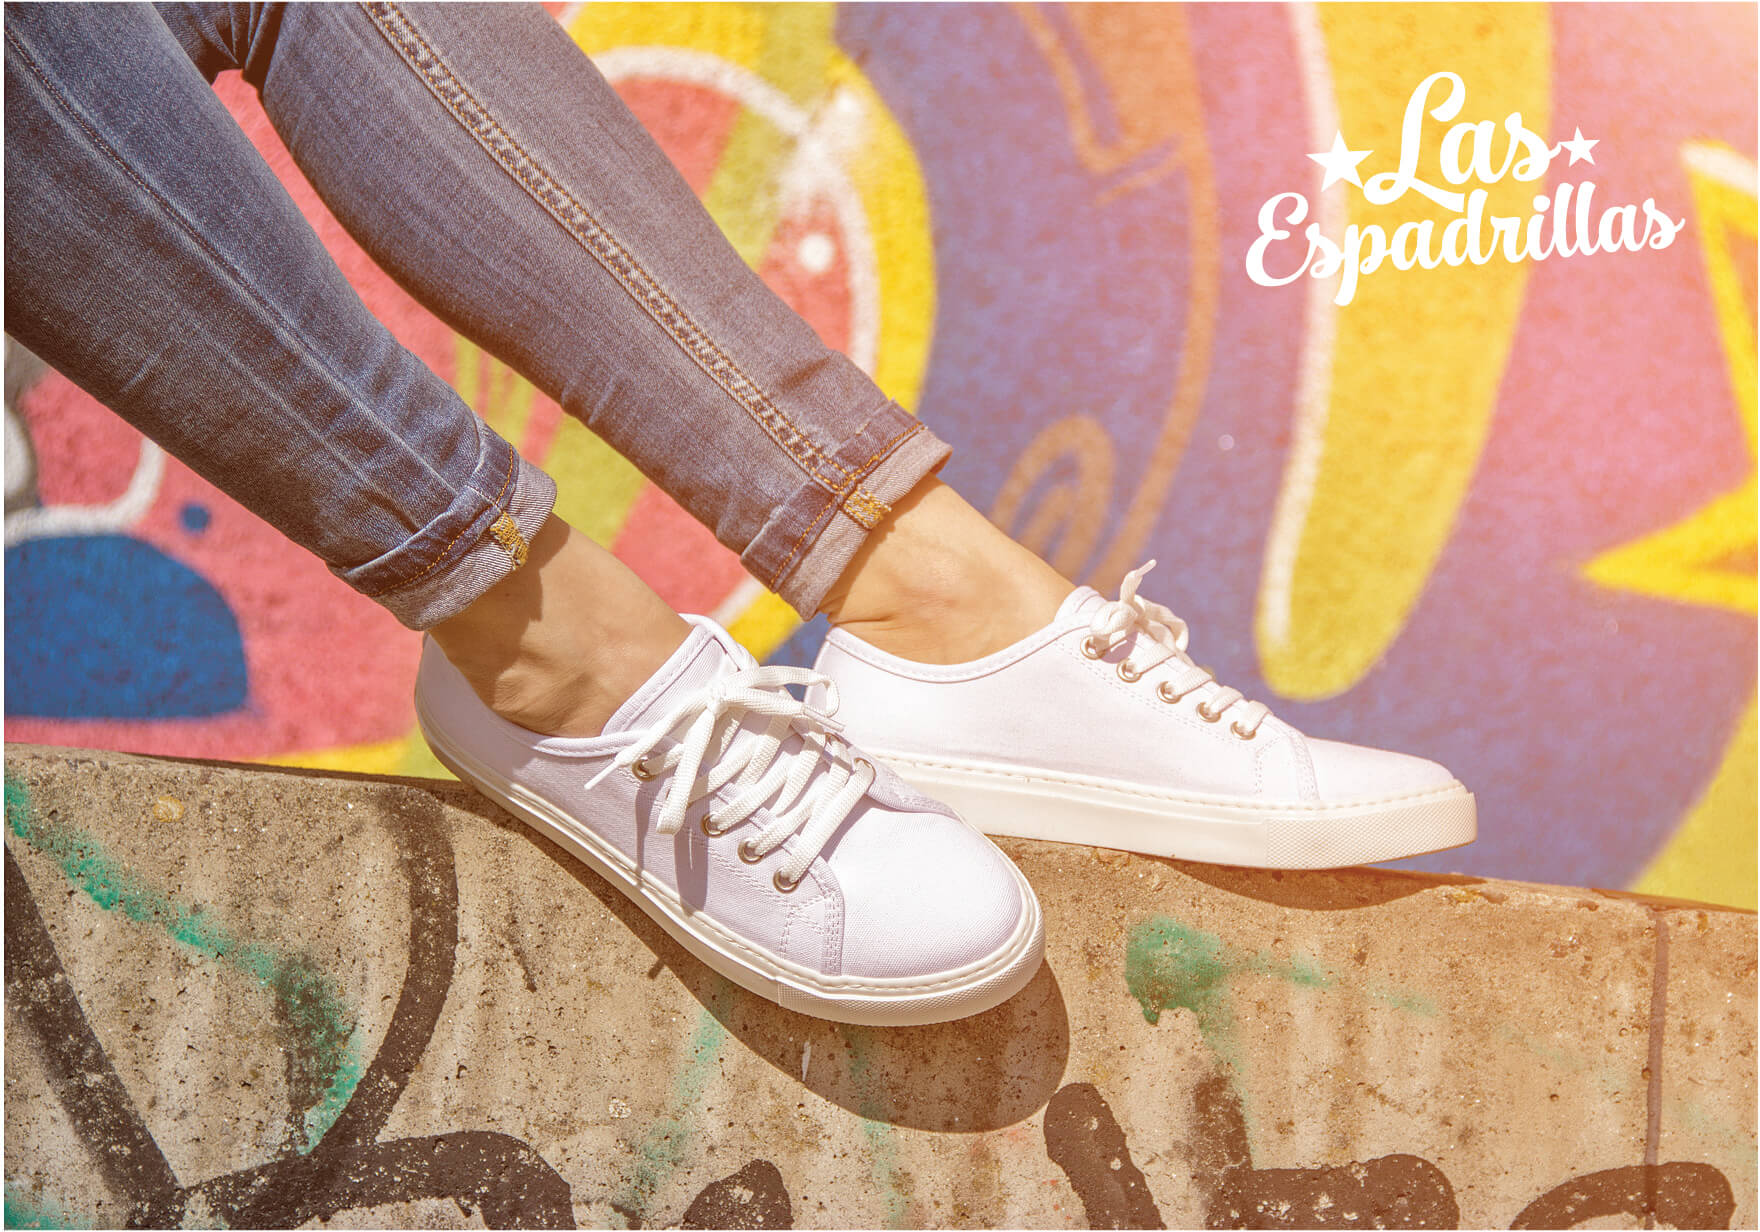 A lovely choice of footwear Las Espadrillas